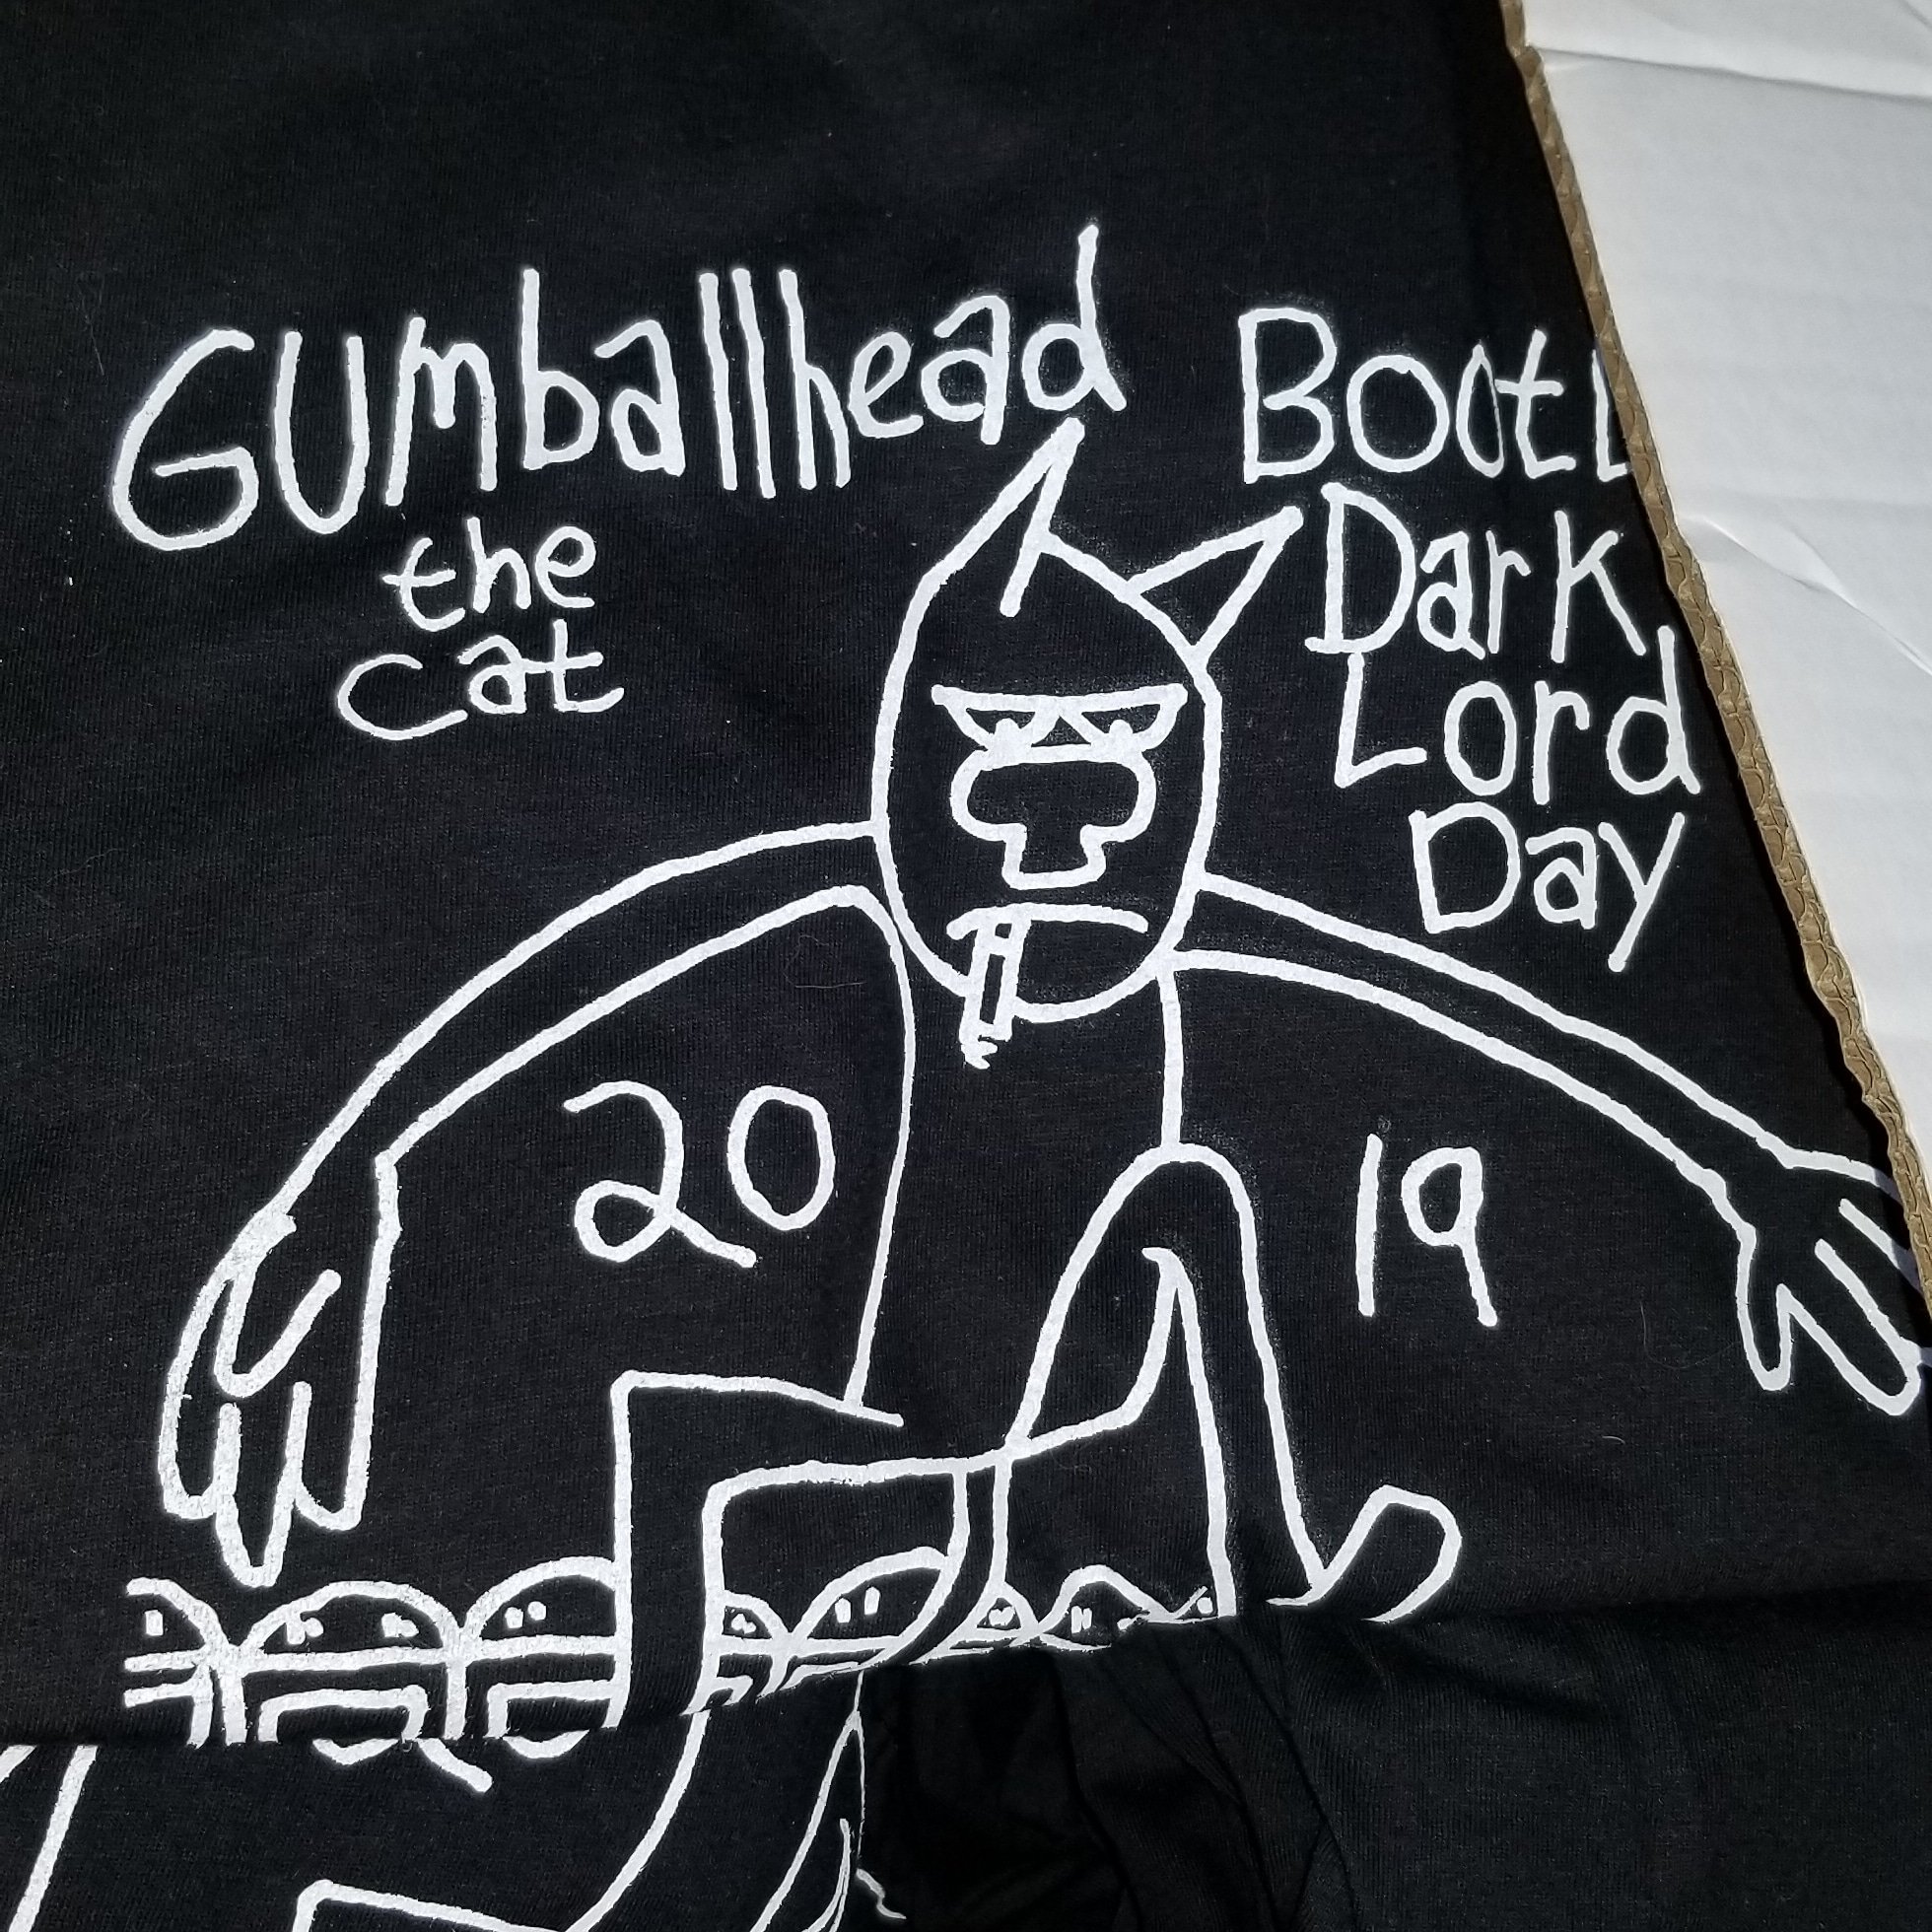 2019 Gumballhead shirt.jpg